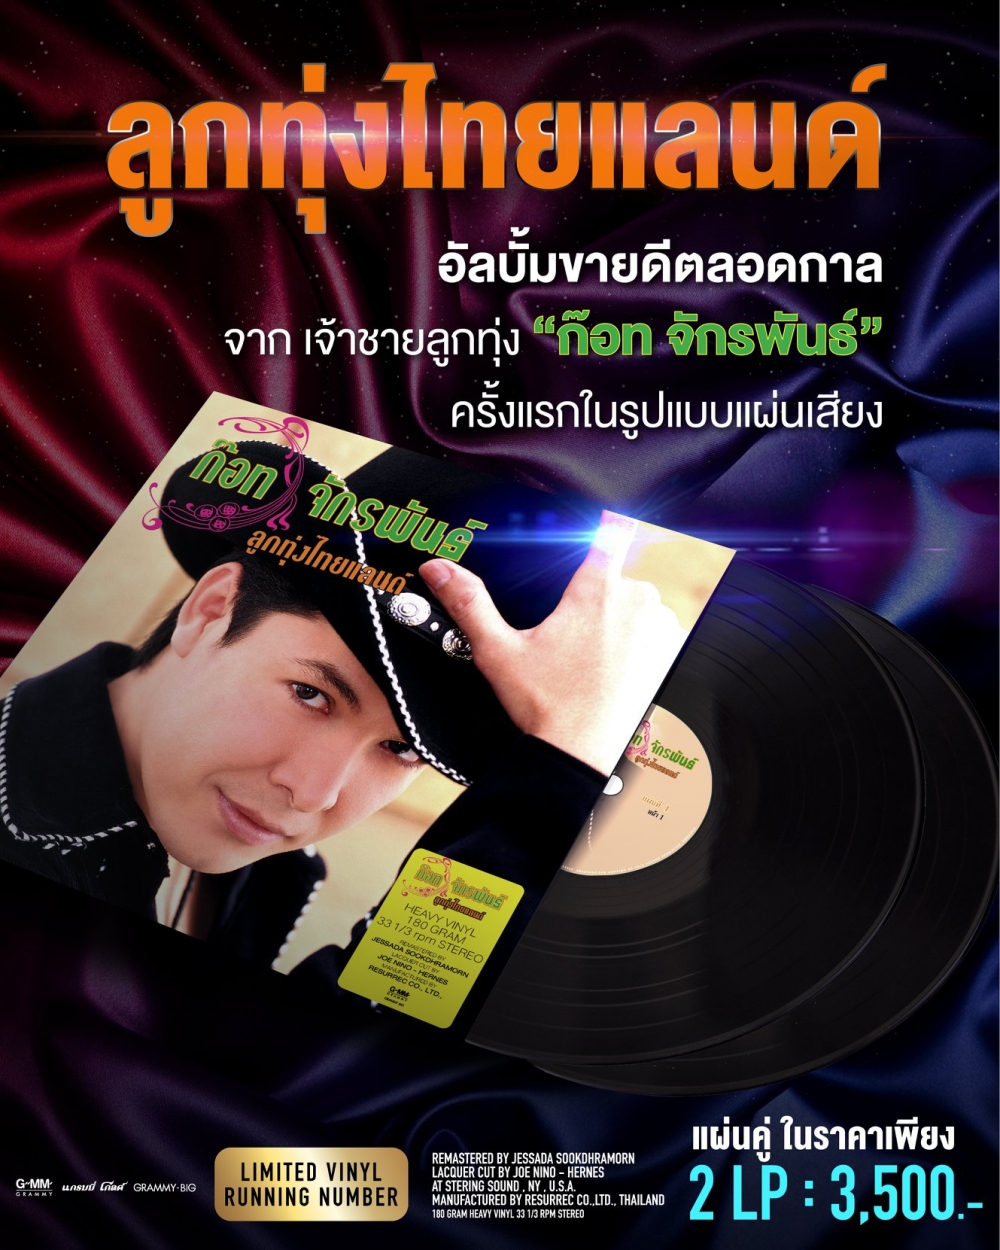 Vinyl ก๊อท จักรพันธ์ ลูกทุ่งไทยแลนด์